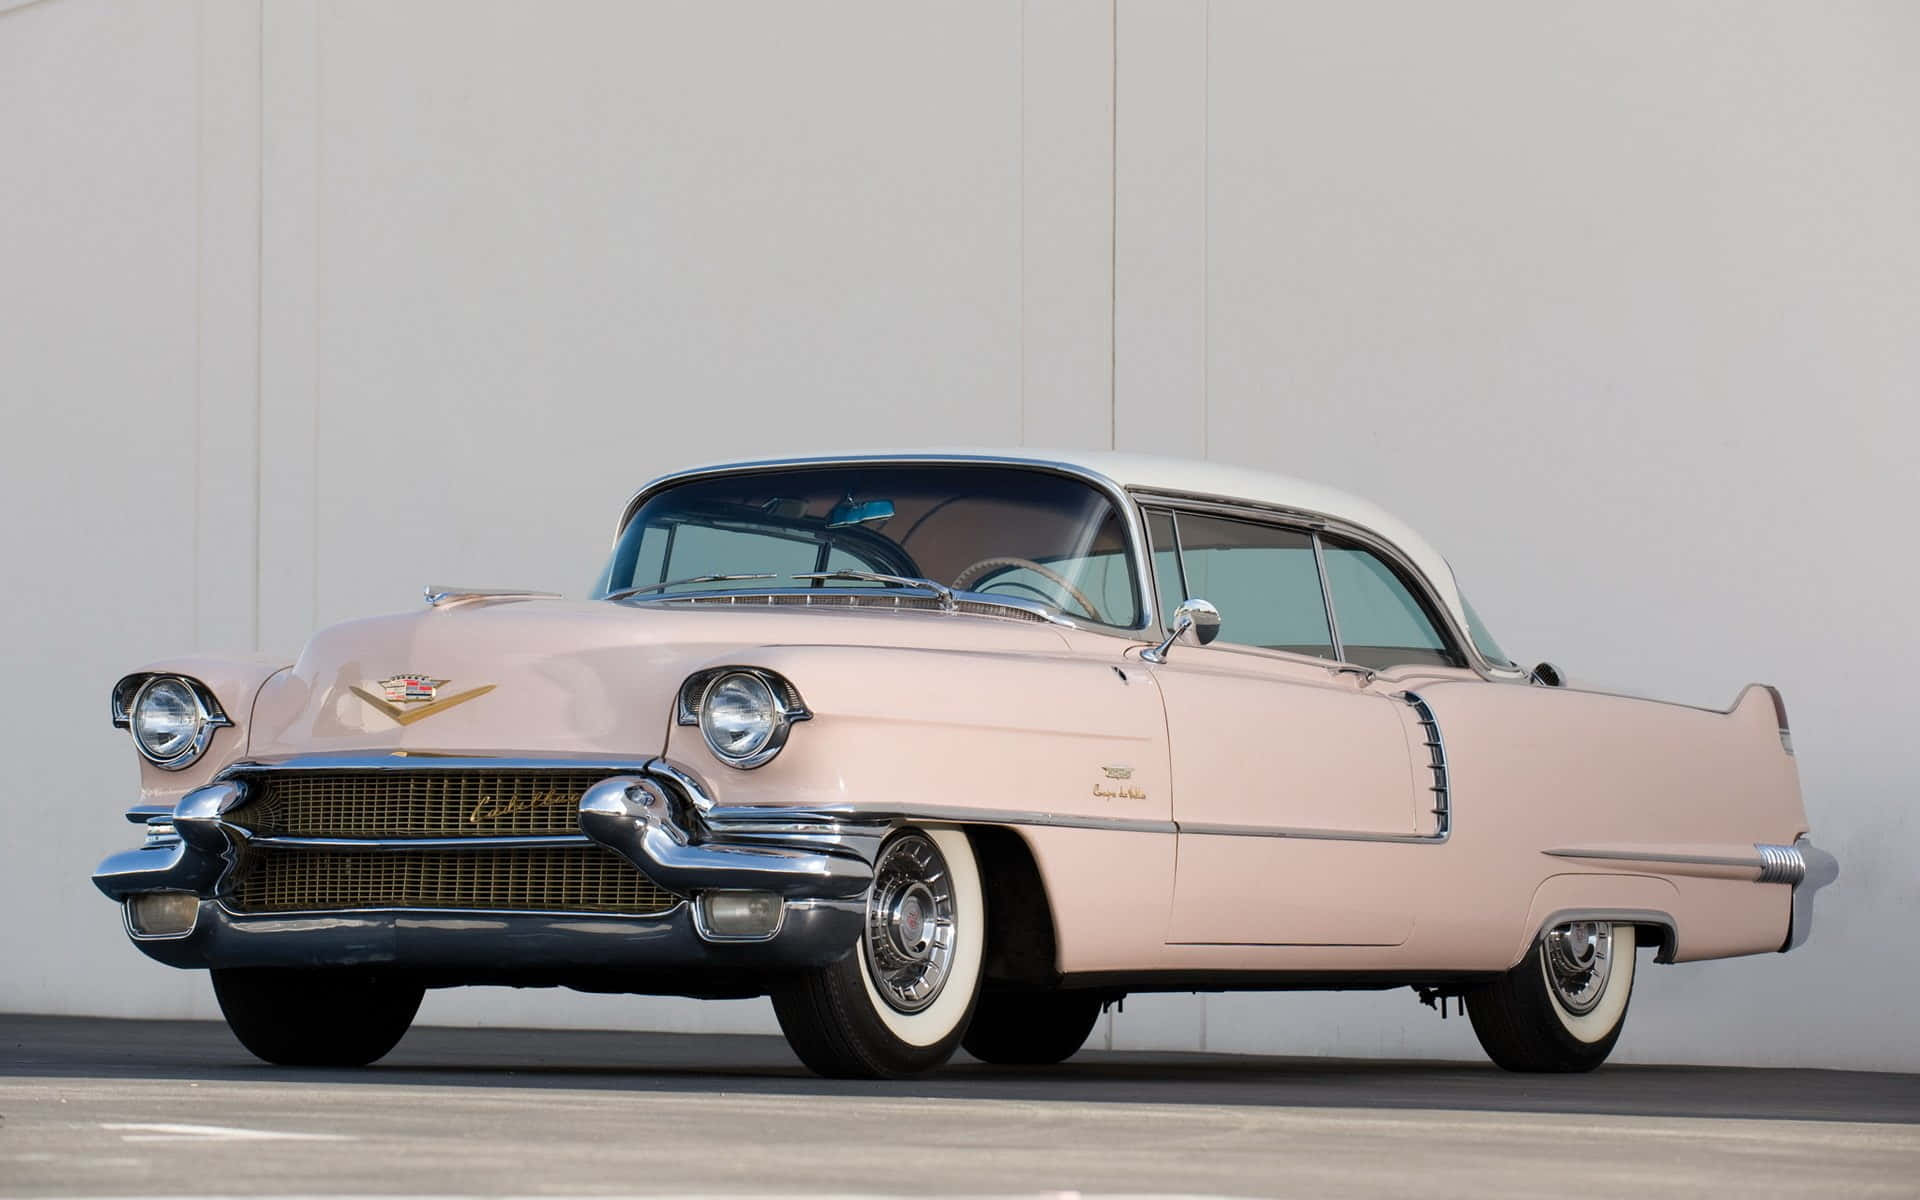 Caption: Classic Luxury: Stunning Cadillac Deville Wallpaper